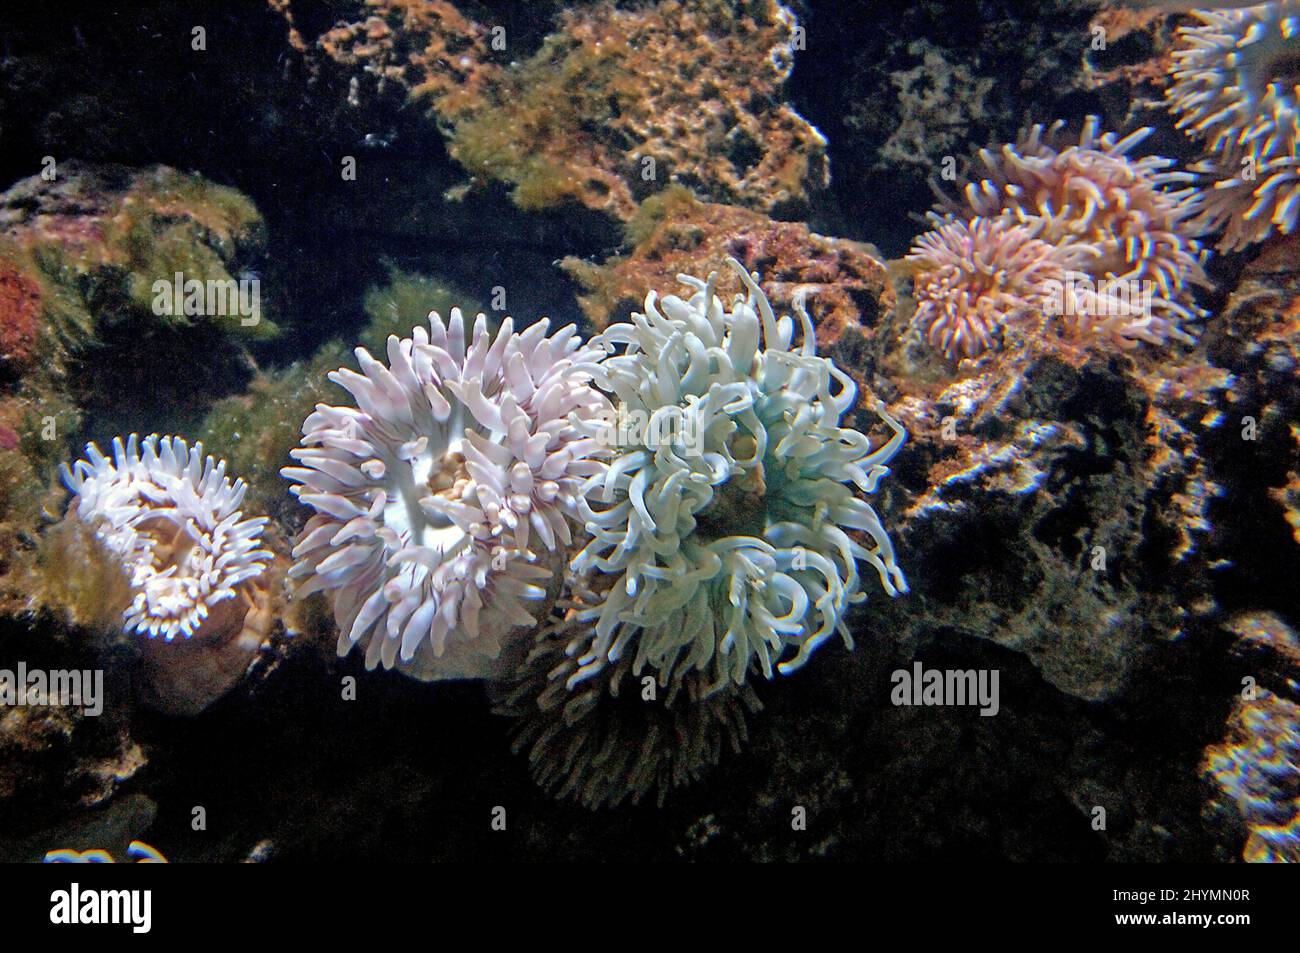 Sea anemone (Urticina eques), sea anemones, under water Stock Photo